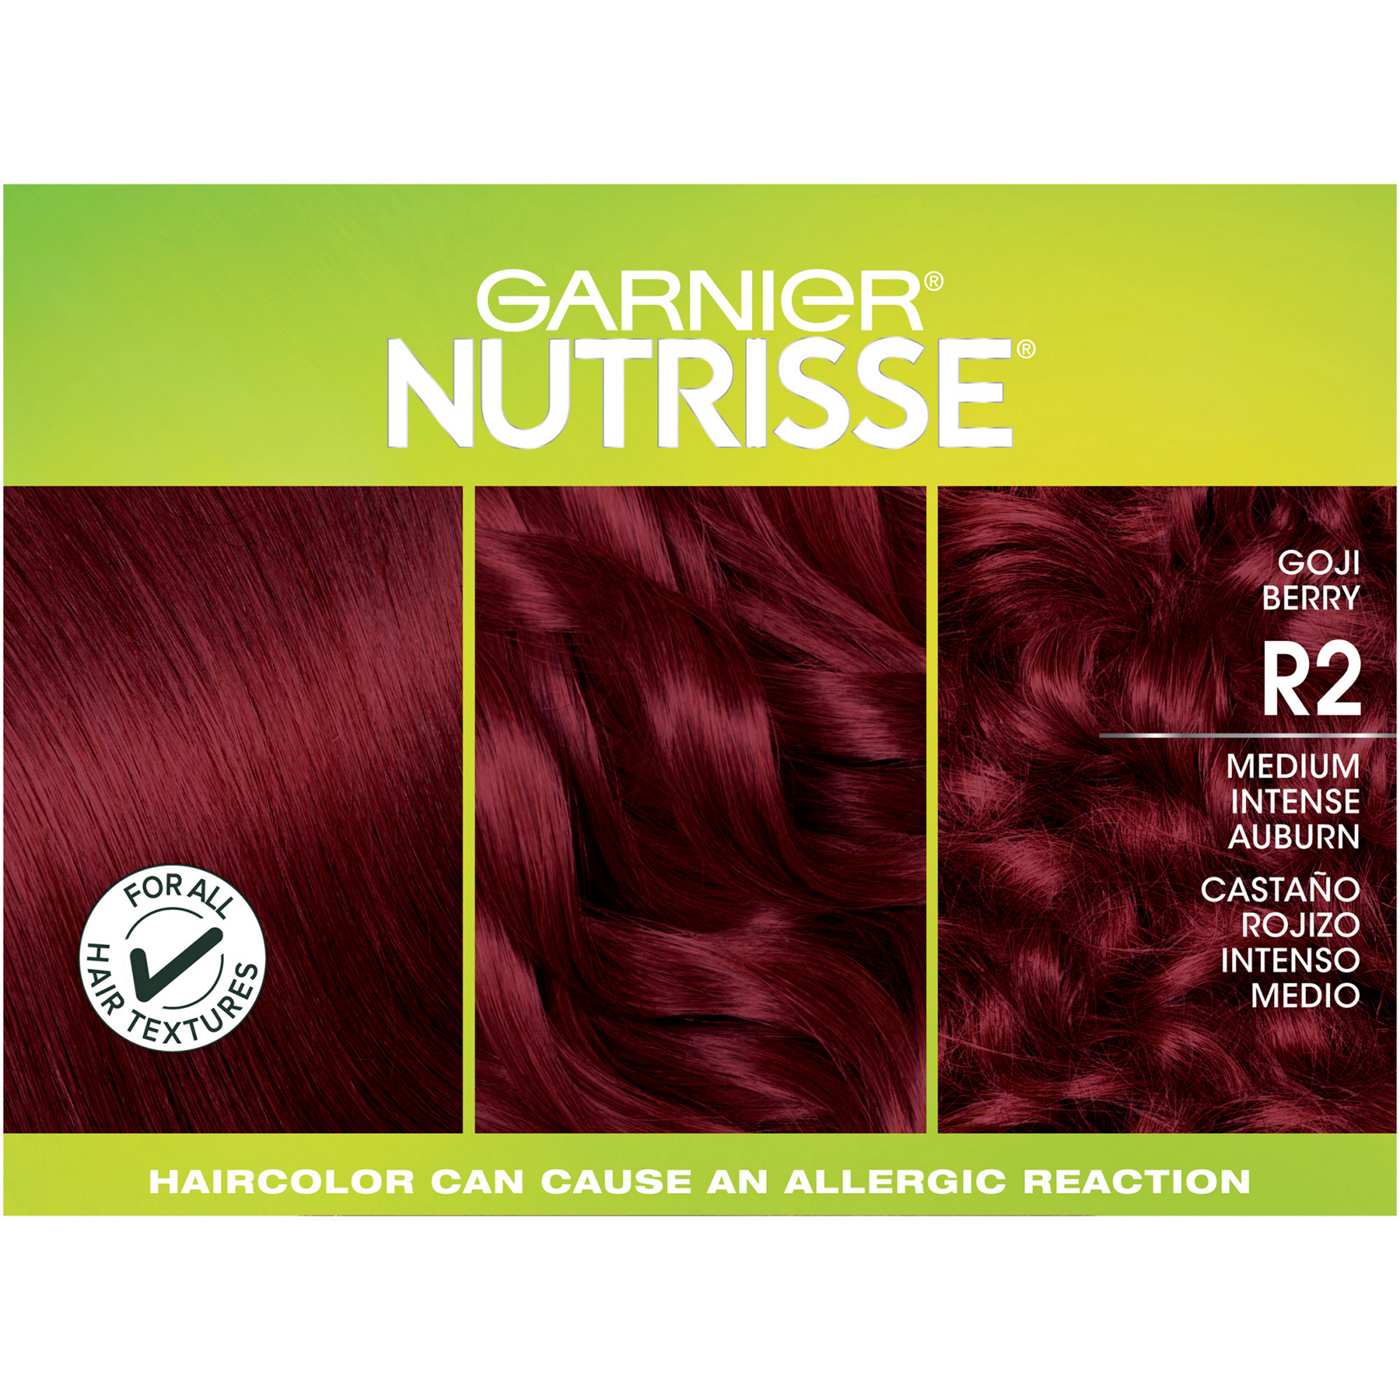 Garnier Nutrisse Ultra Color Nourishing Bold Permanent Hair Color Creme R2 Medium Intense Auburn; image 2 of 8